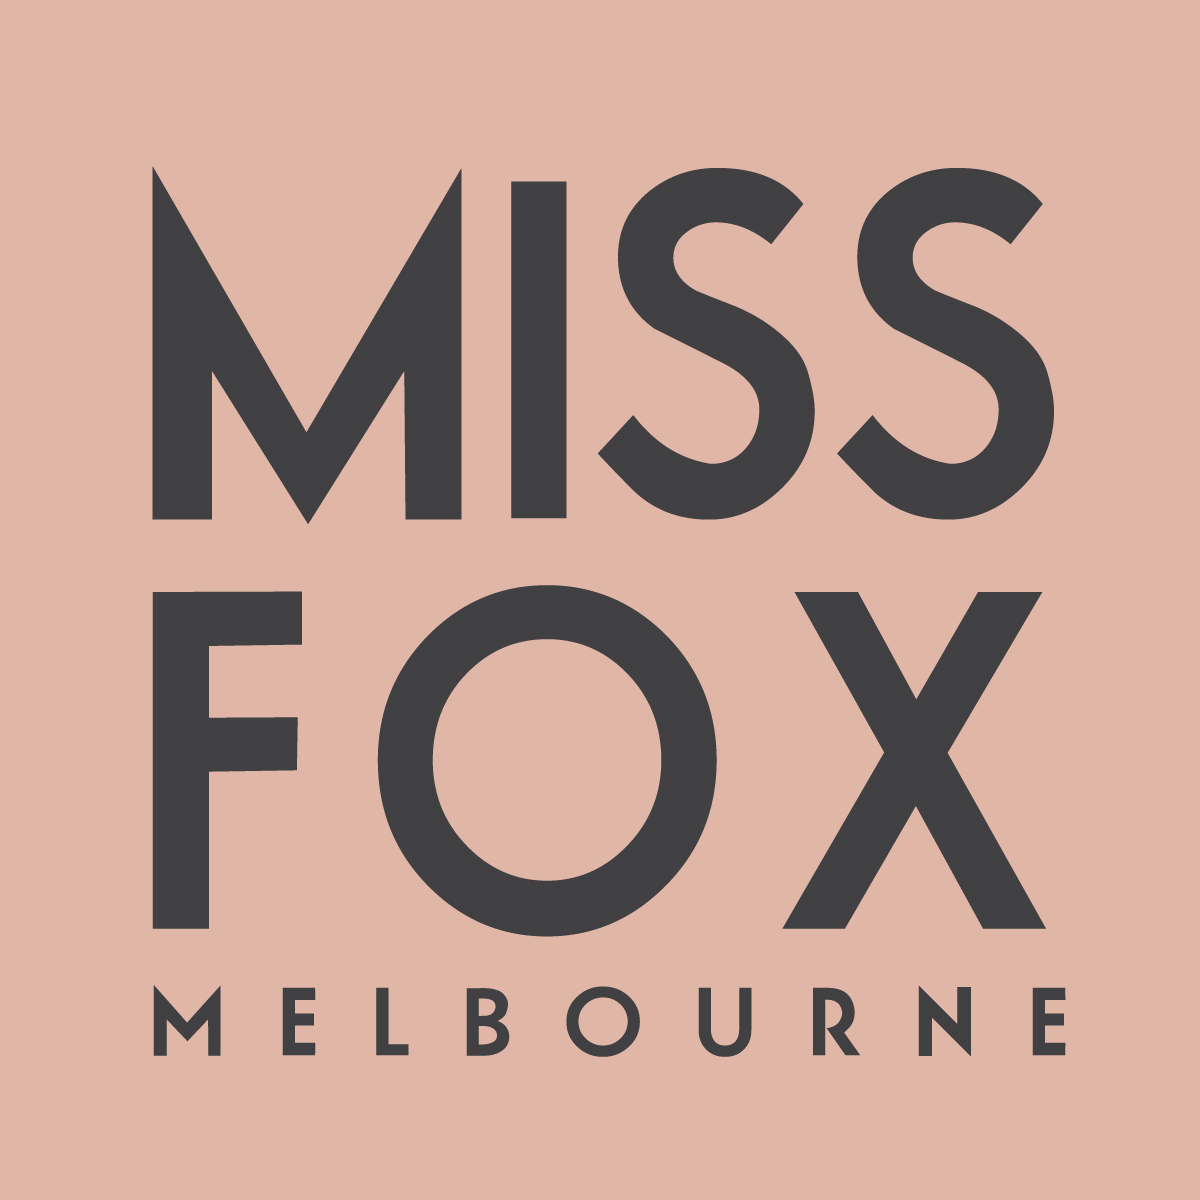 Image result for MISS FOX Melbourne